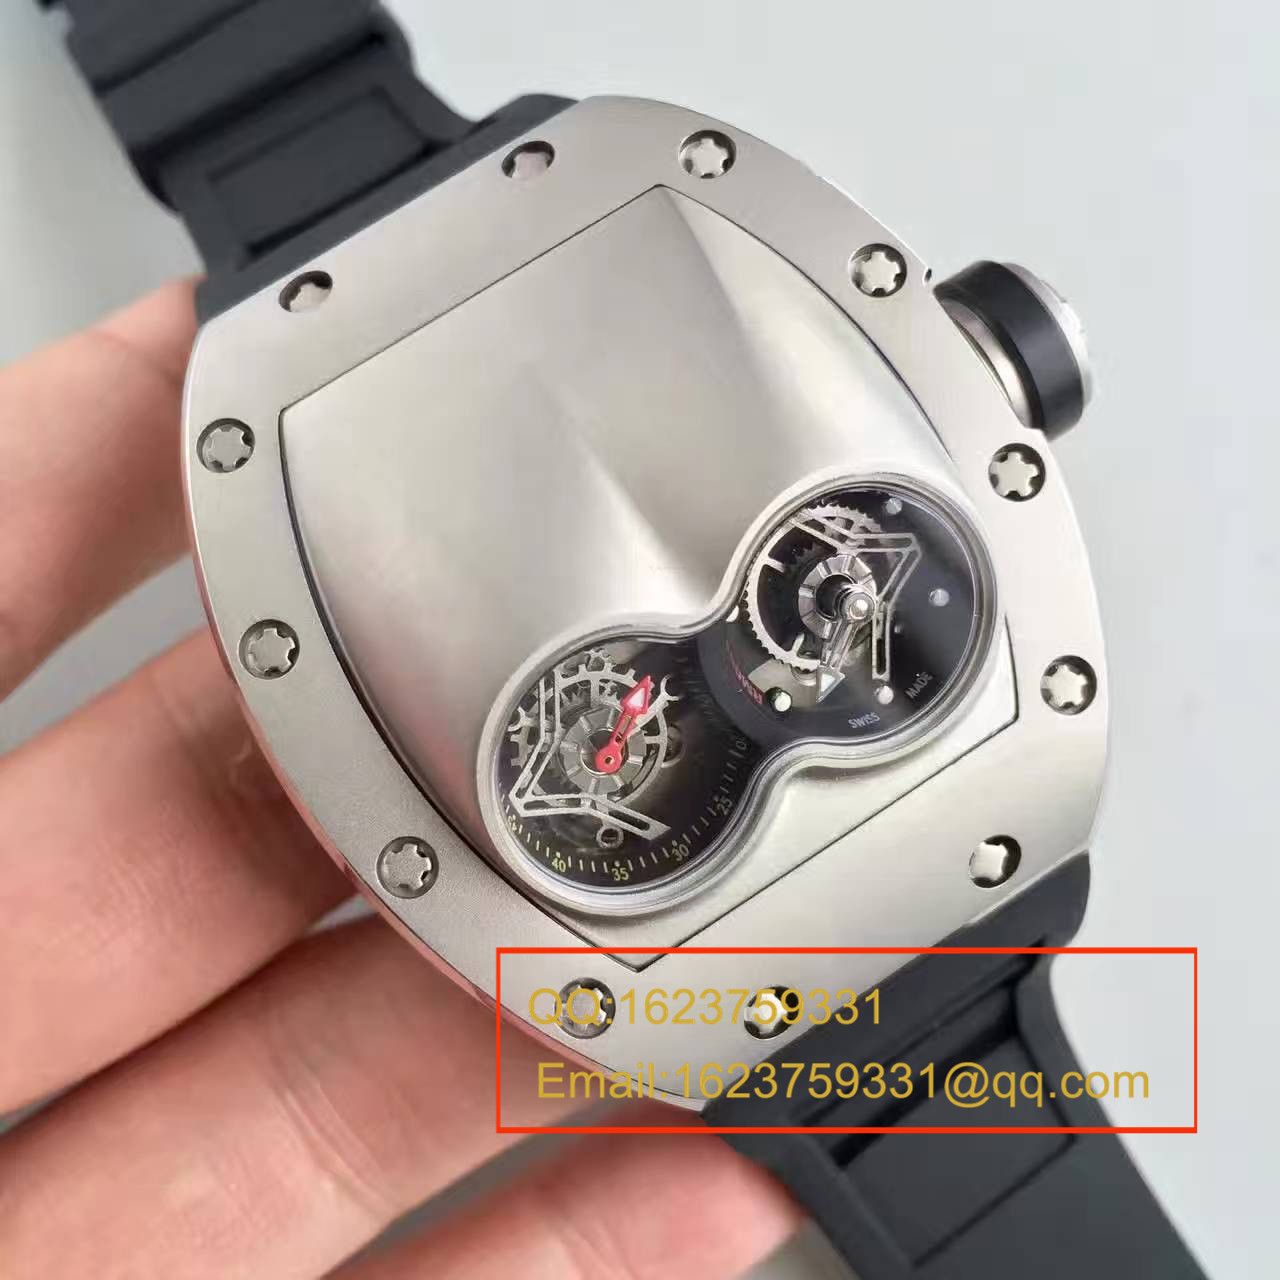 【RM顶级复刻手表】里查德米勒男士系列RM 053男表 / RM033A